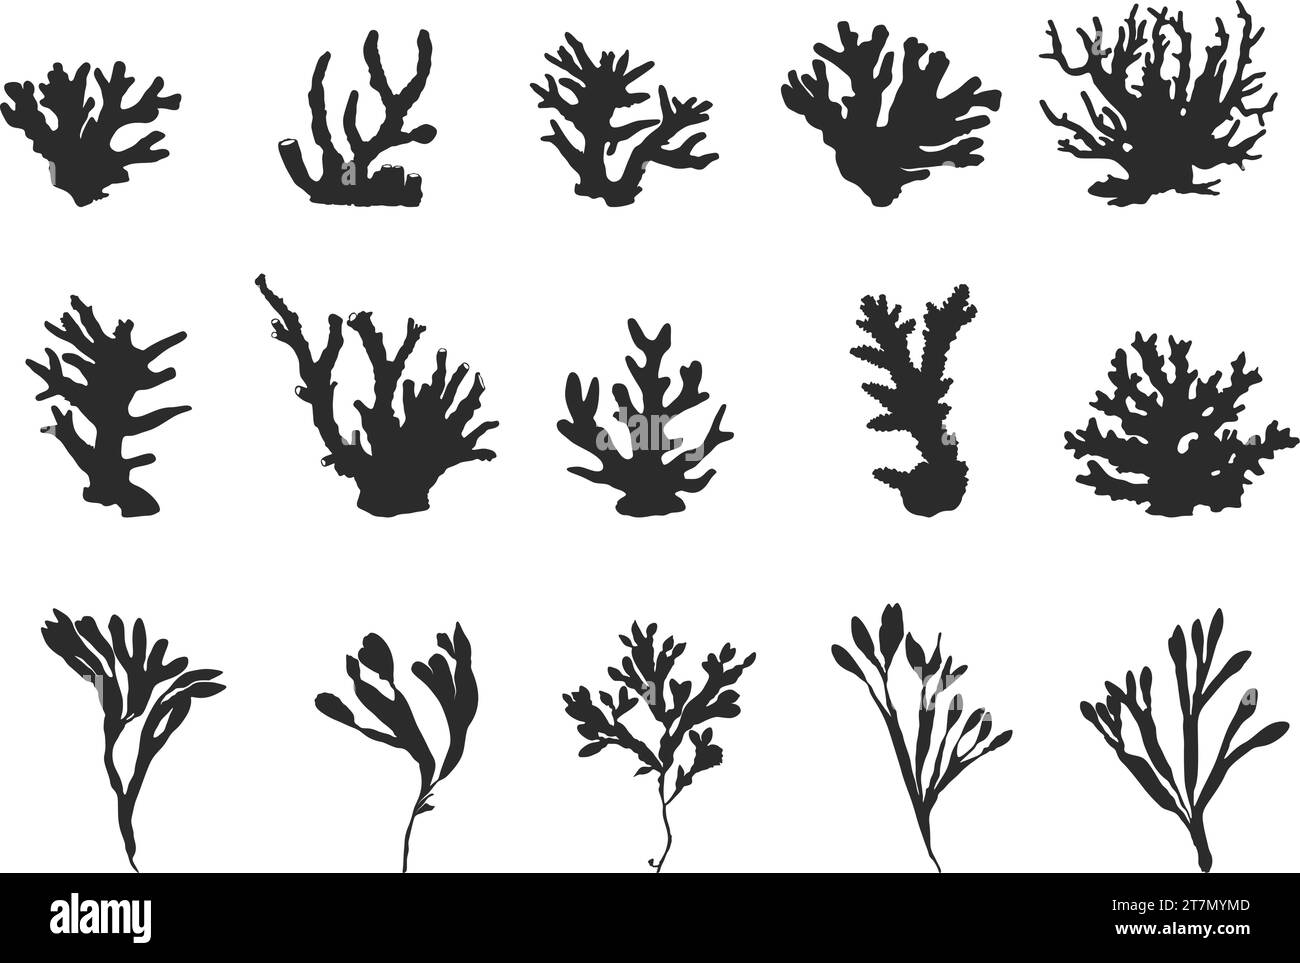 Korallensilhouette, Seekorallen Silhouette, Seetang Silhouette, Korallenklipart, Korallenvektor Illustration. Stock Vektor